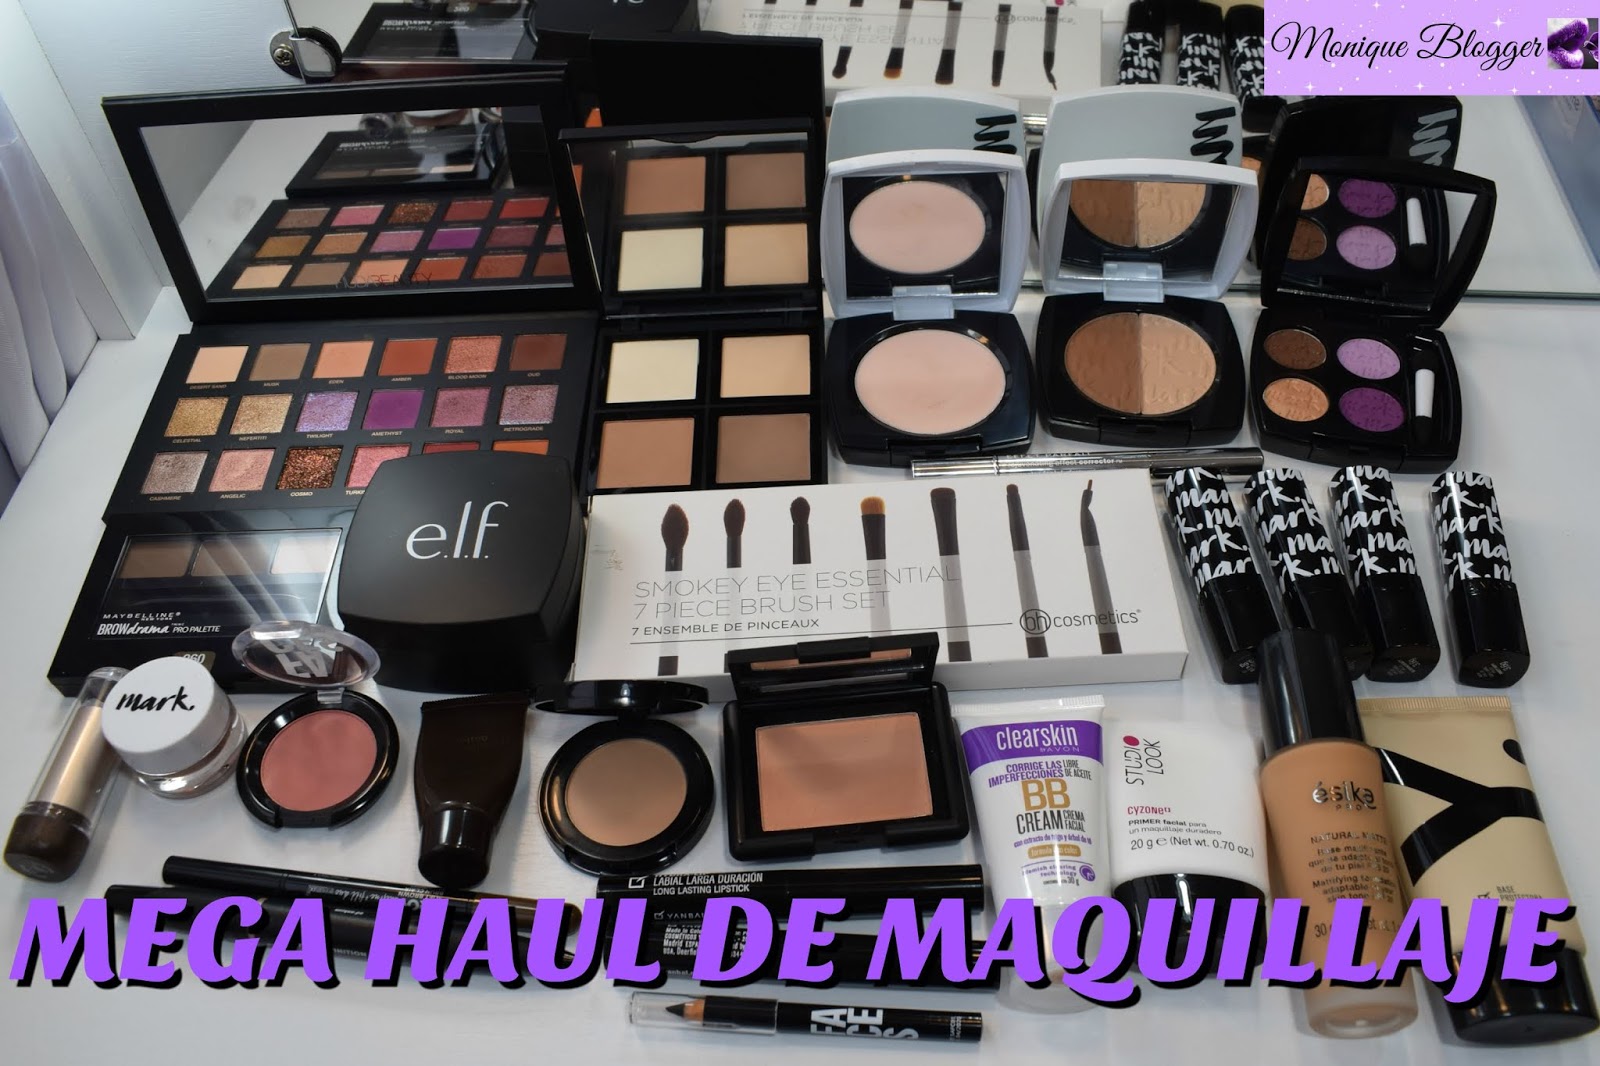 Monique Blogger: Mega Haul de maquillaje Mark de Avon, Natura, Unique, Huda  Beauty, Maybelline, Elf, BH Cosmetics